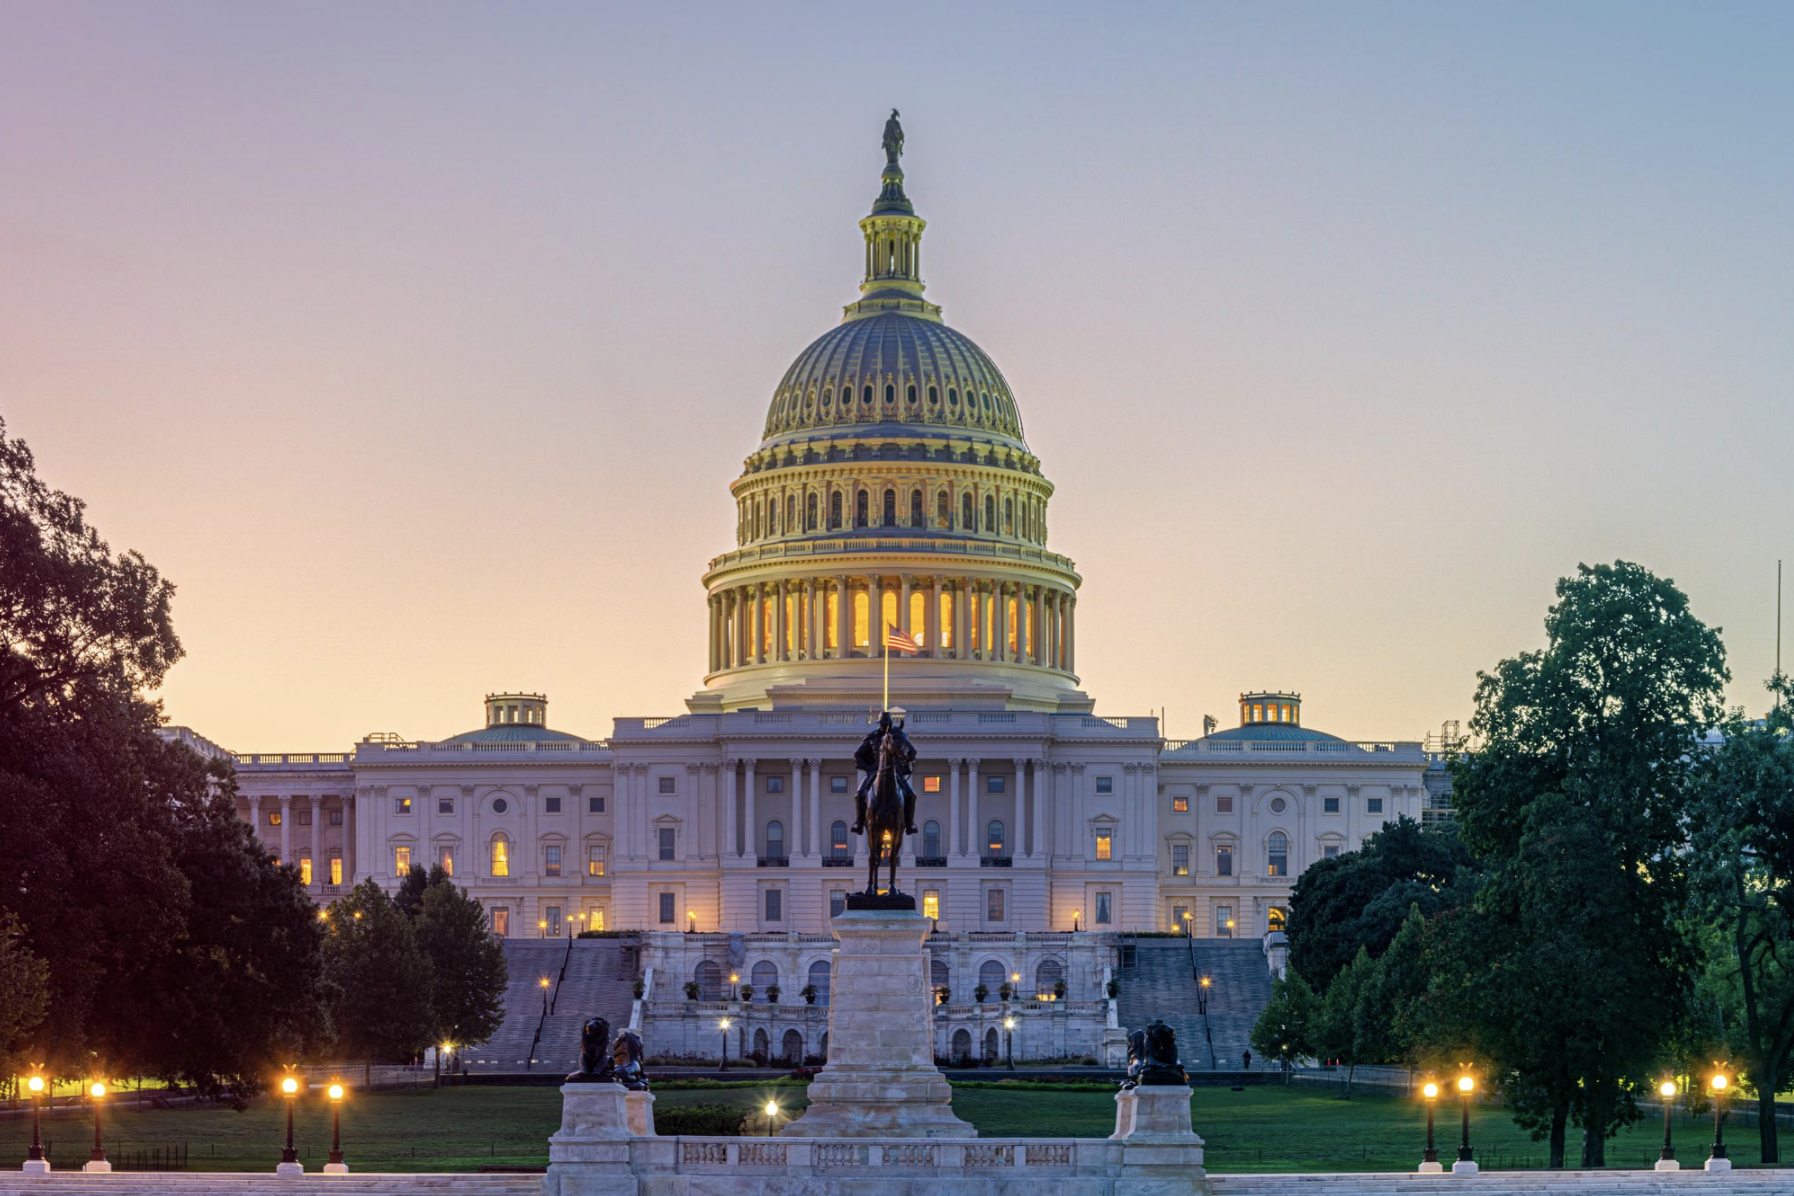 The U.S. Capitol in Washington, D.C. (Wikimedia Commons)